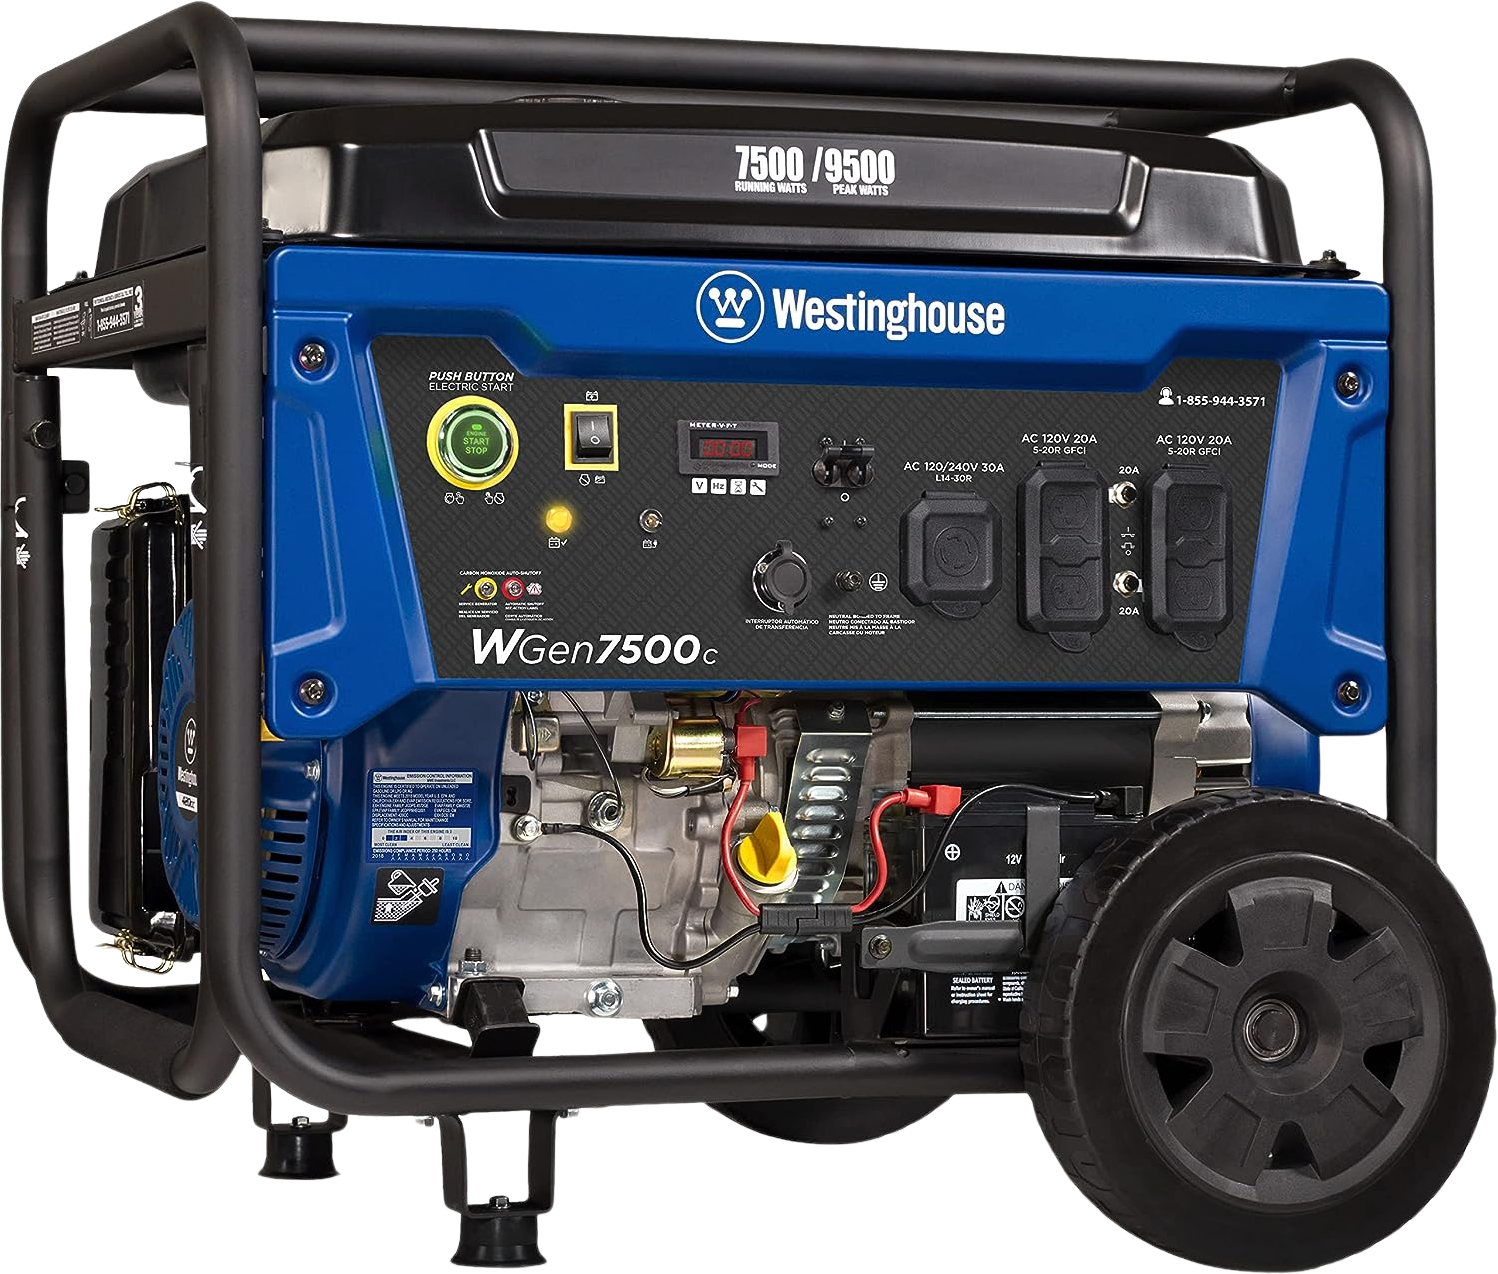 Westinghouse WGen7500c Generator 7500W/9500W 30 Amp Remote Start Gas with CO Sensor New